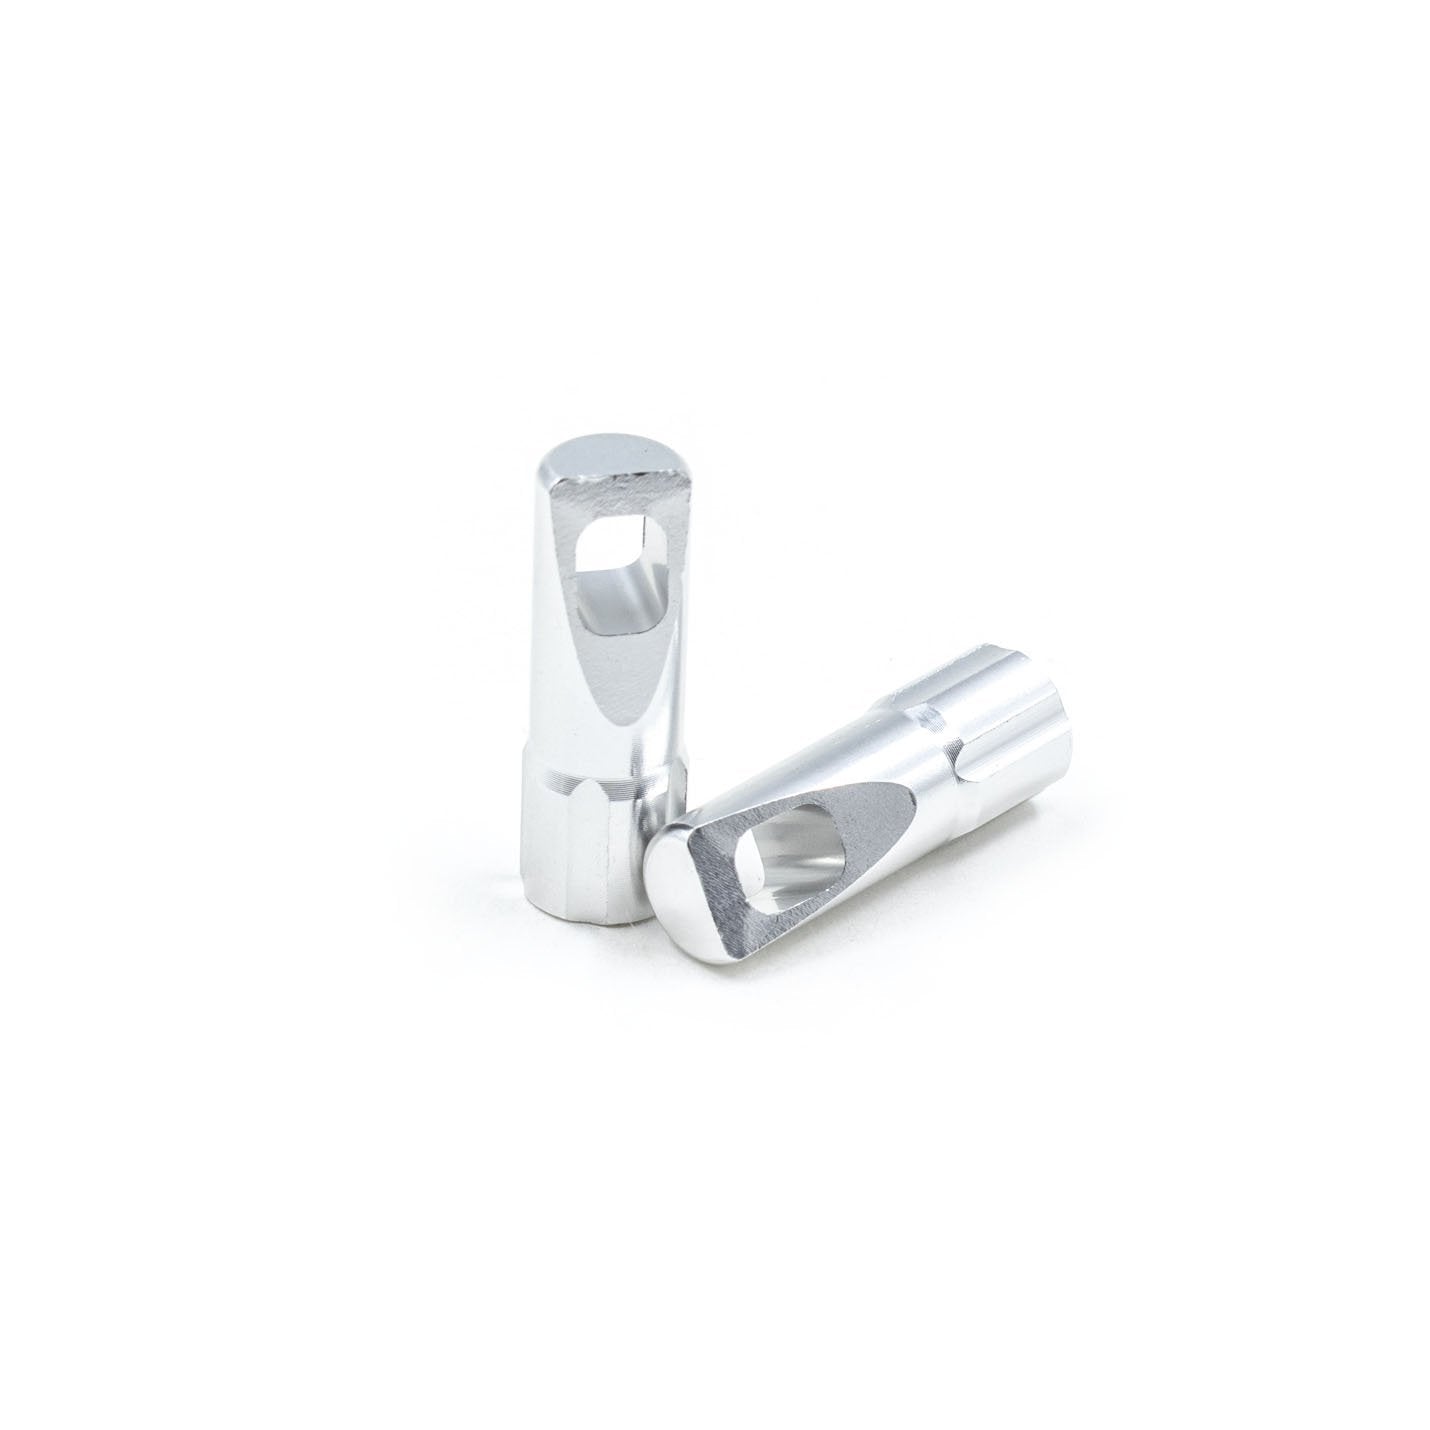 Silver, ultra-lightweight aluminium valve cap set for Presta valve types for road and mountain bikes